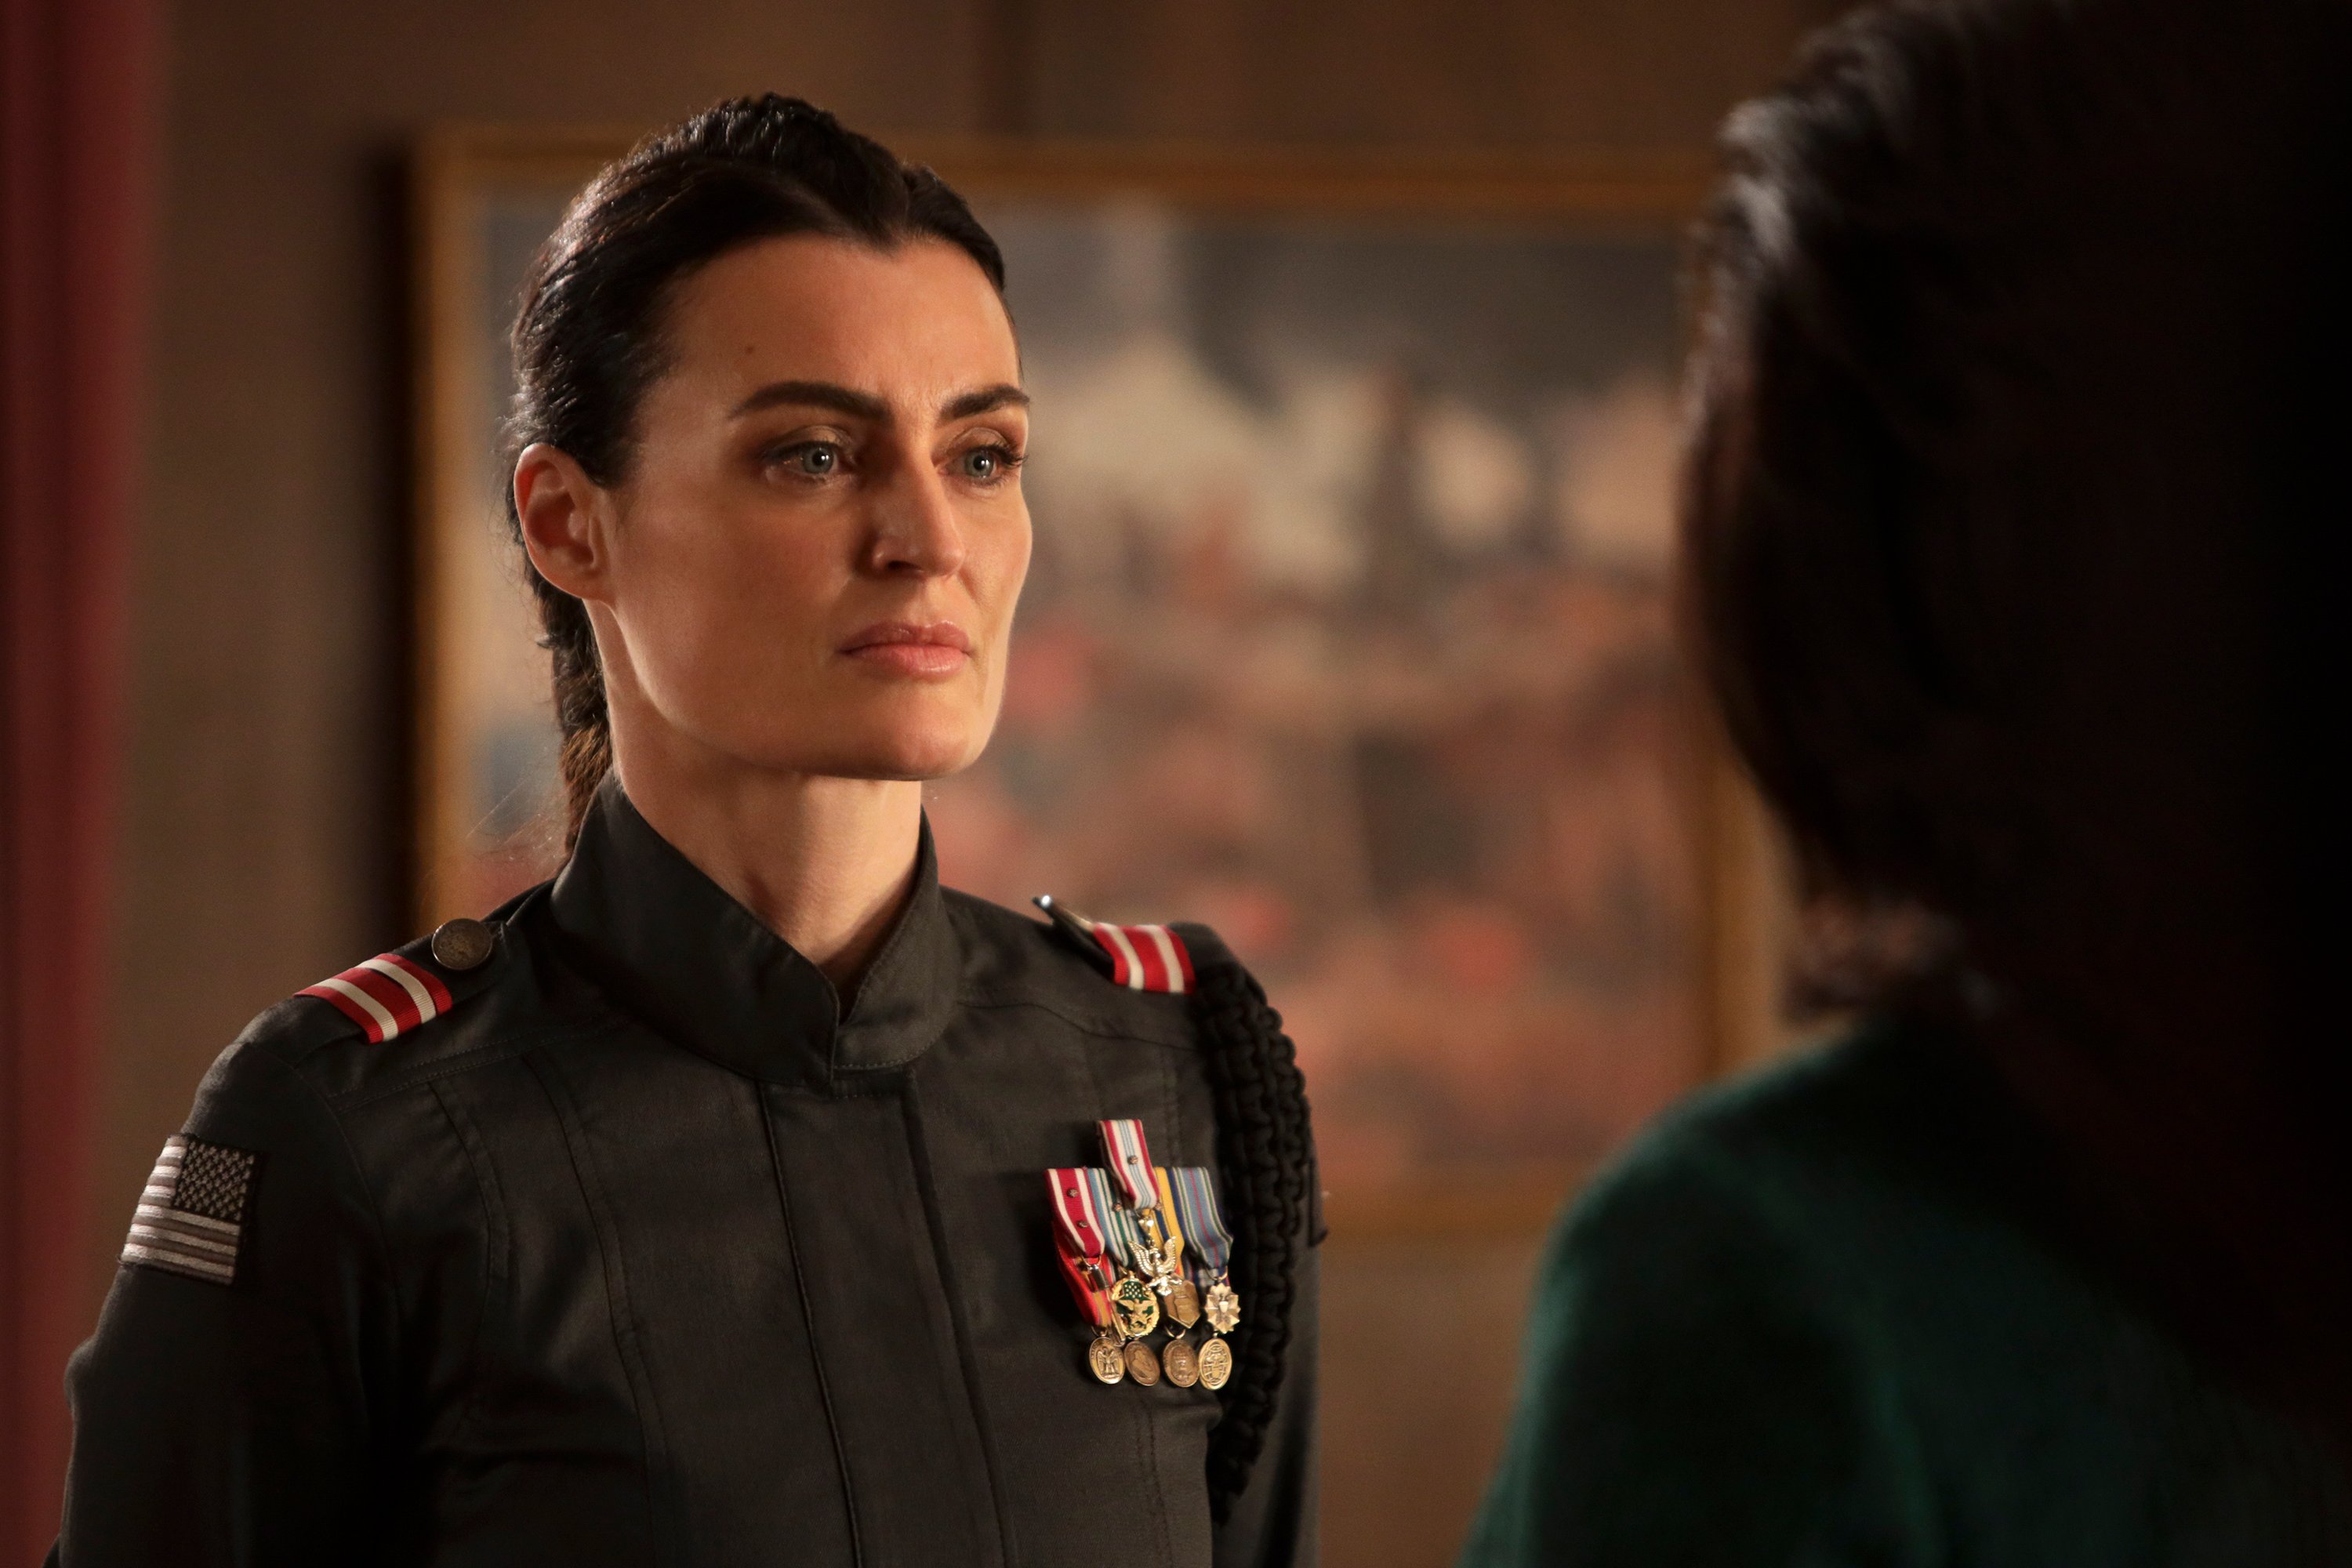 Lyne Renée as Sara Alder 'Motherland: Fort Salem' wearing military uniform and medals in Season 2